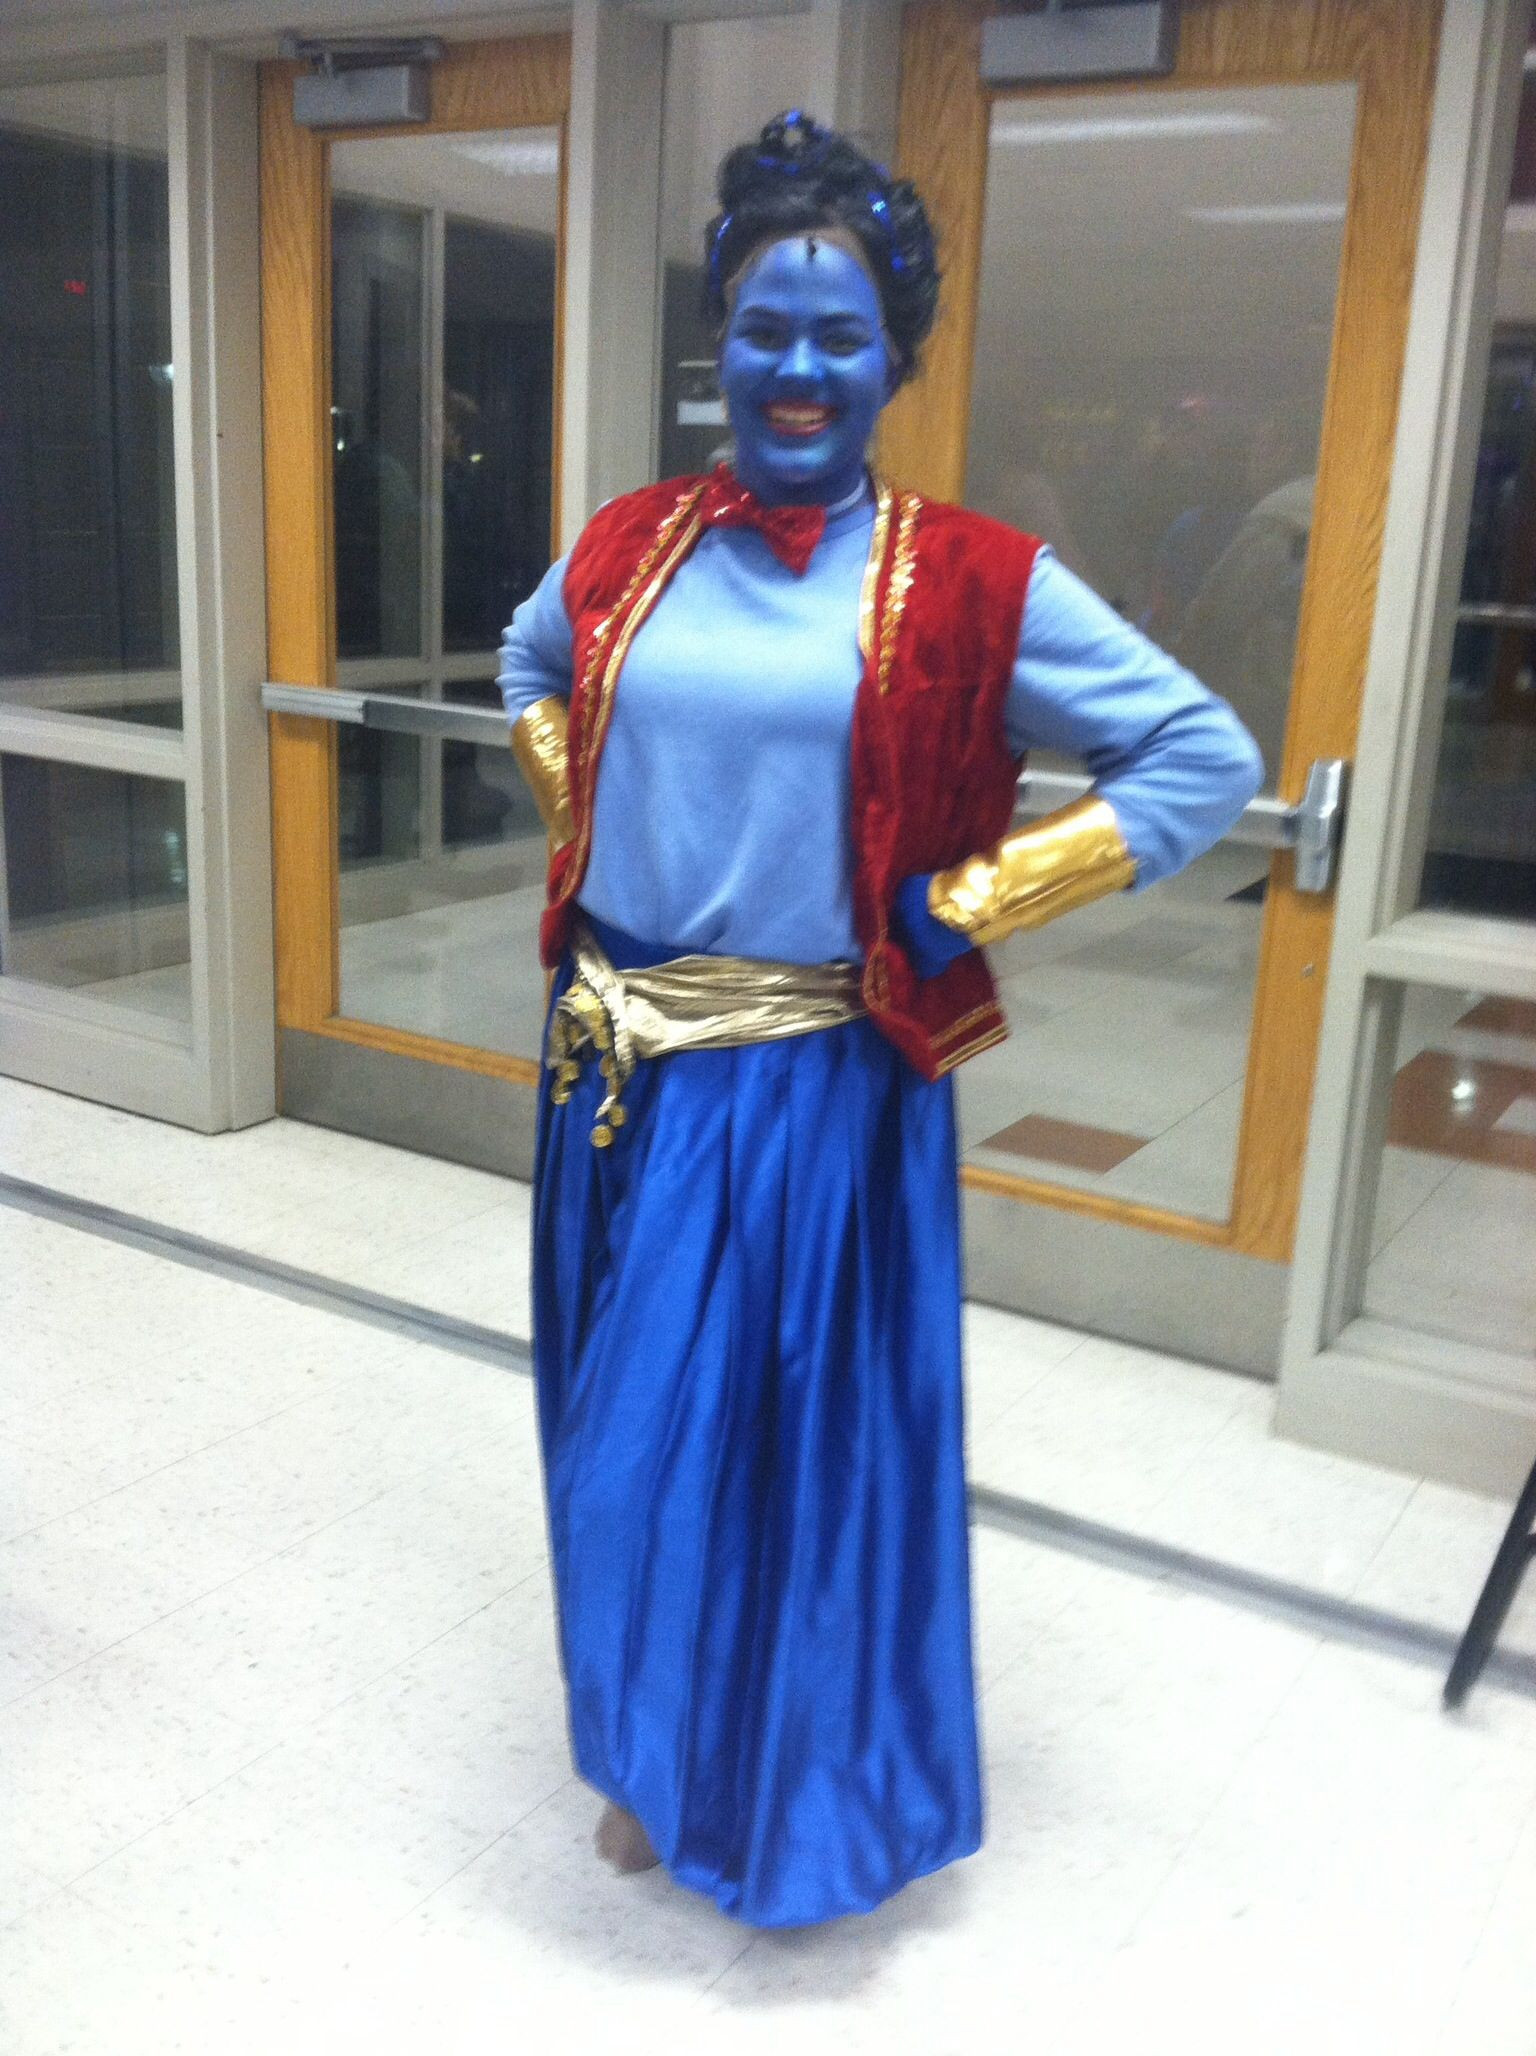 Best ideas about Genie Costume DIY
. Save or Pin Aladdin Genie costume Elizabeth Mitchell as Genie Now.